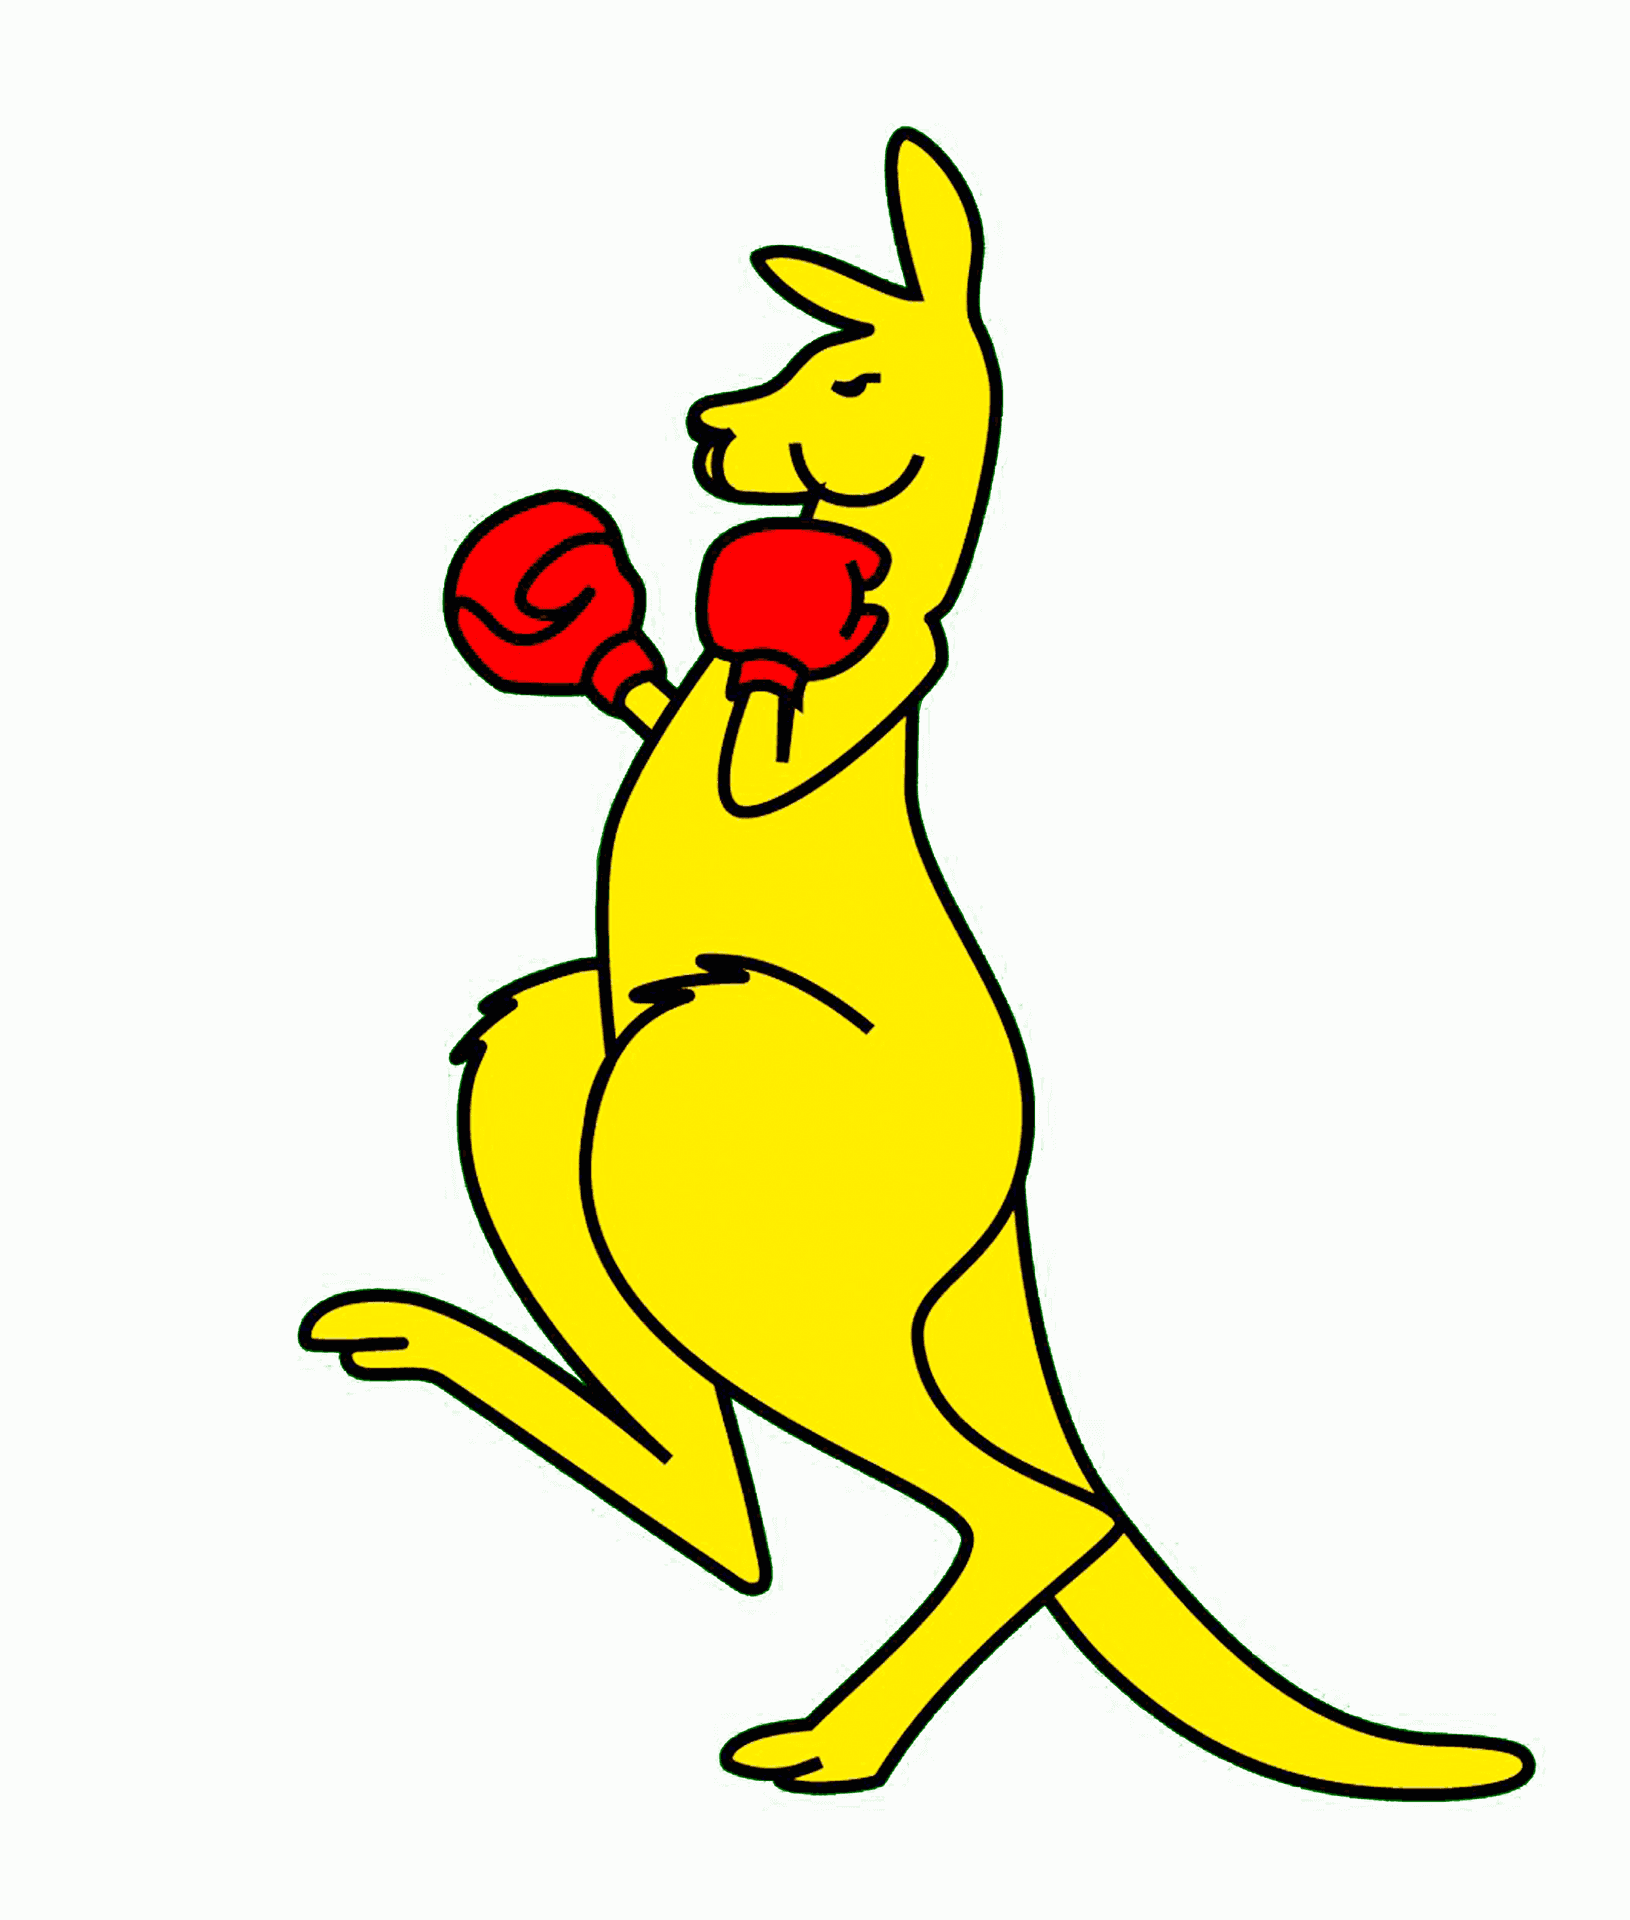 Boxing Kangaroo Cartoon Illustration PNG